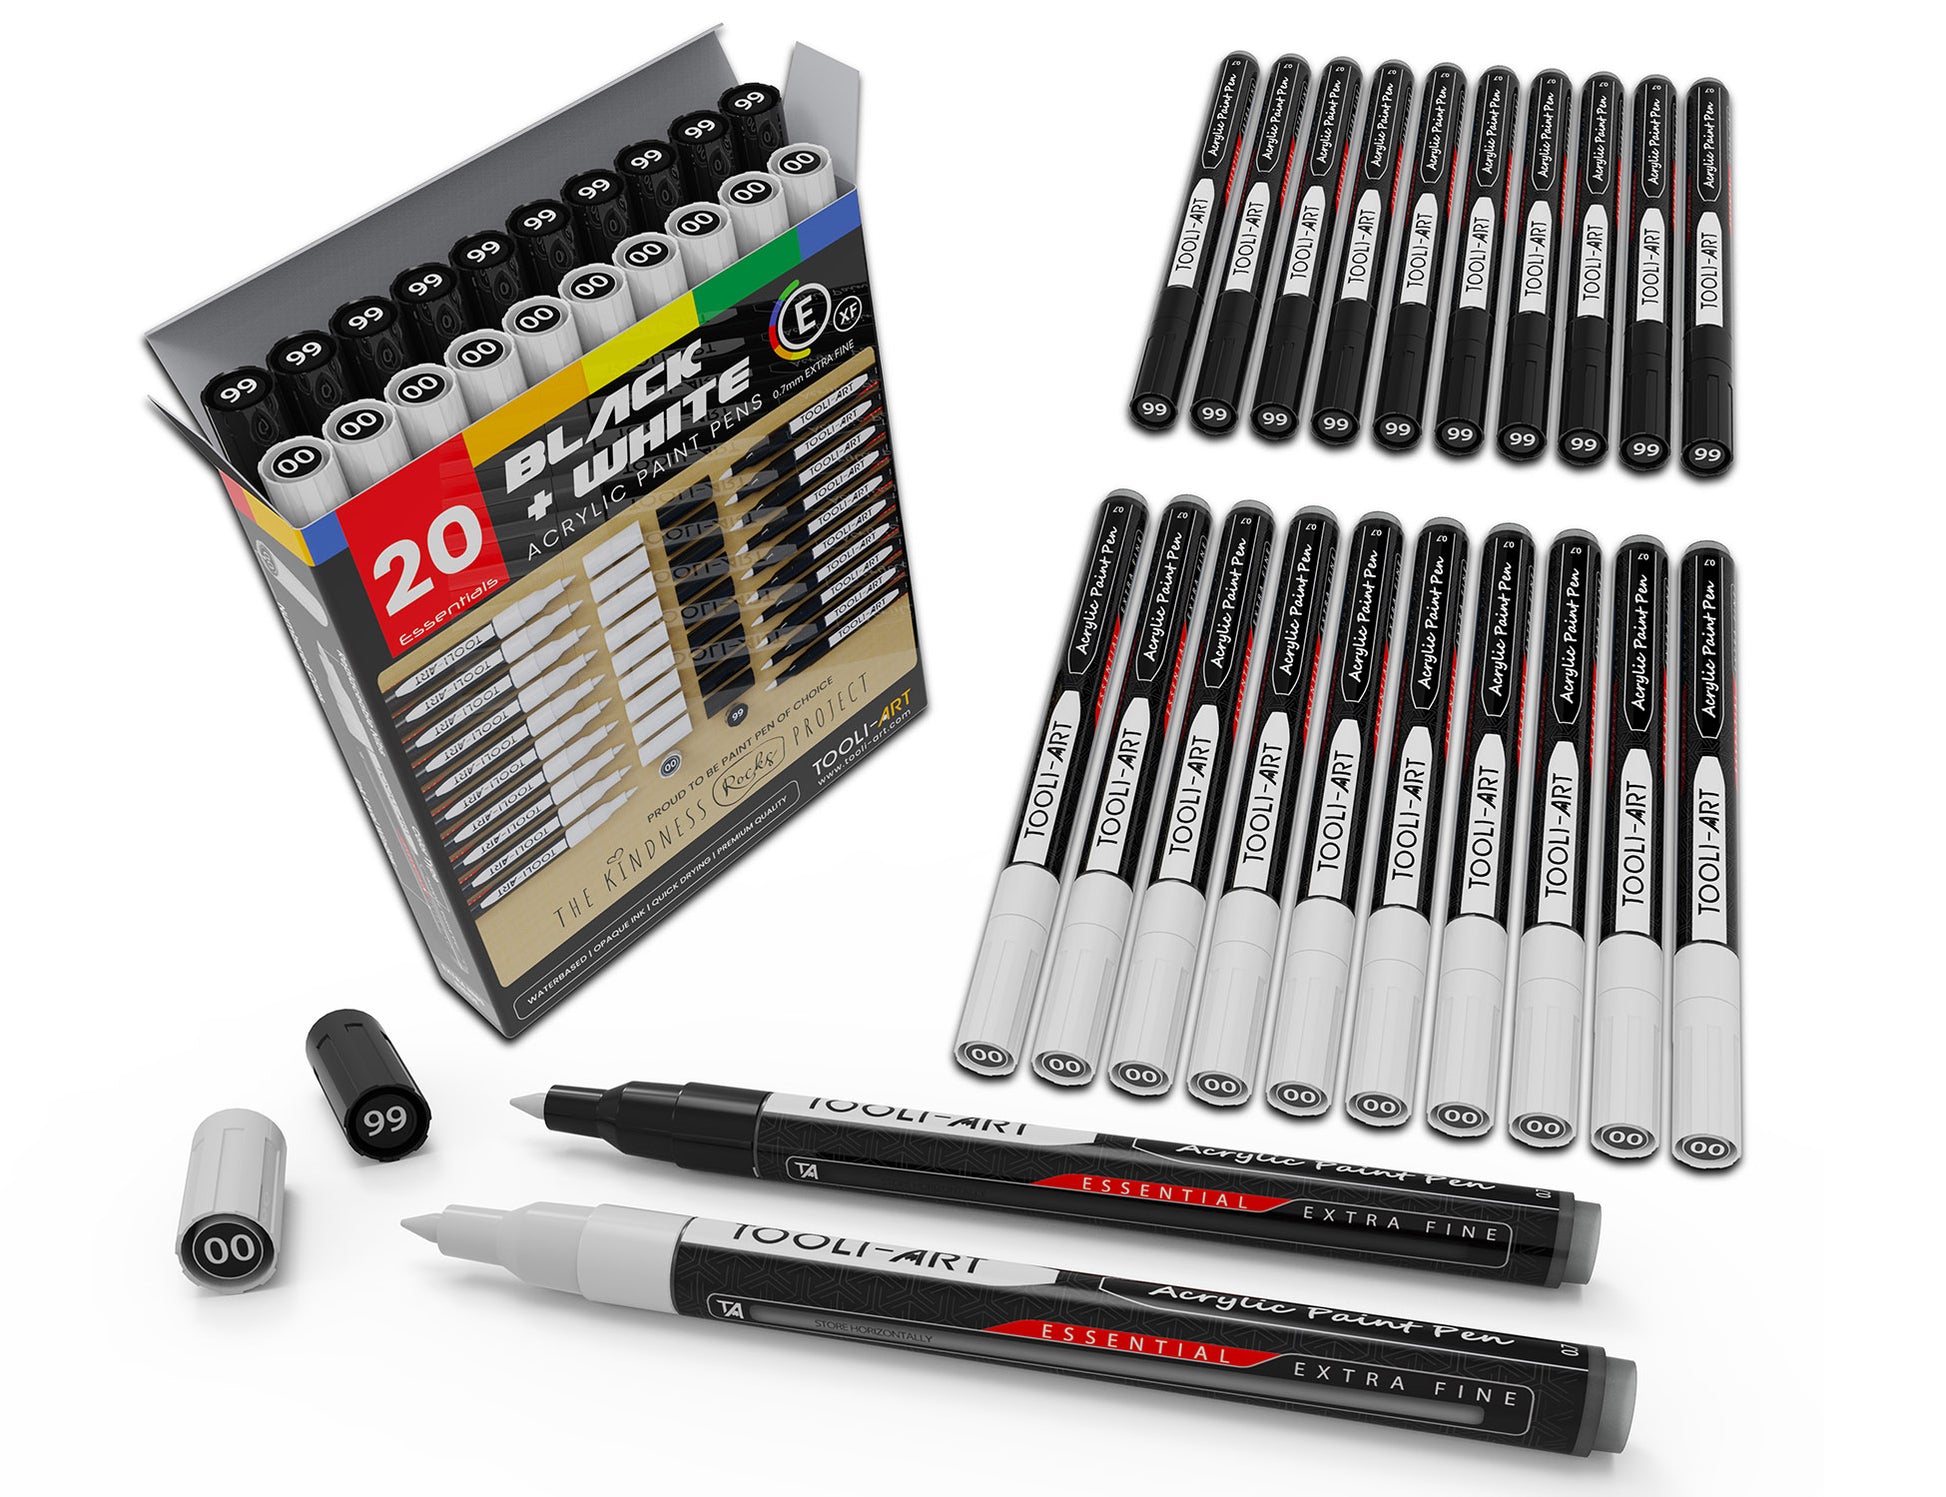 Tooli-Art Acrylic Paint Markers Paint Pens Special Colors Set - METALLIC